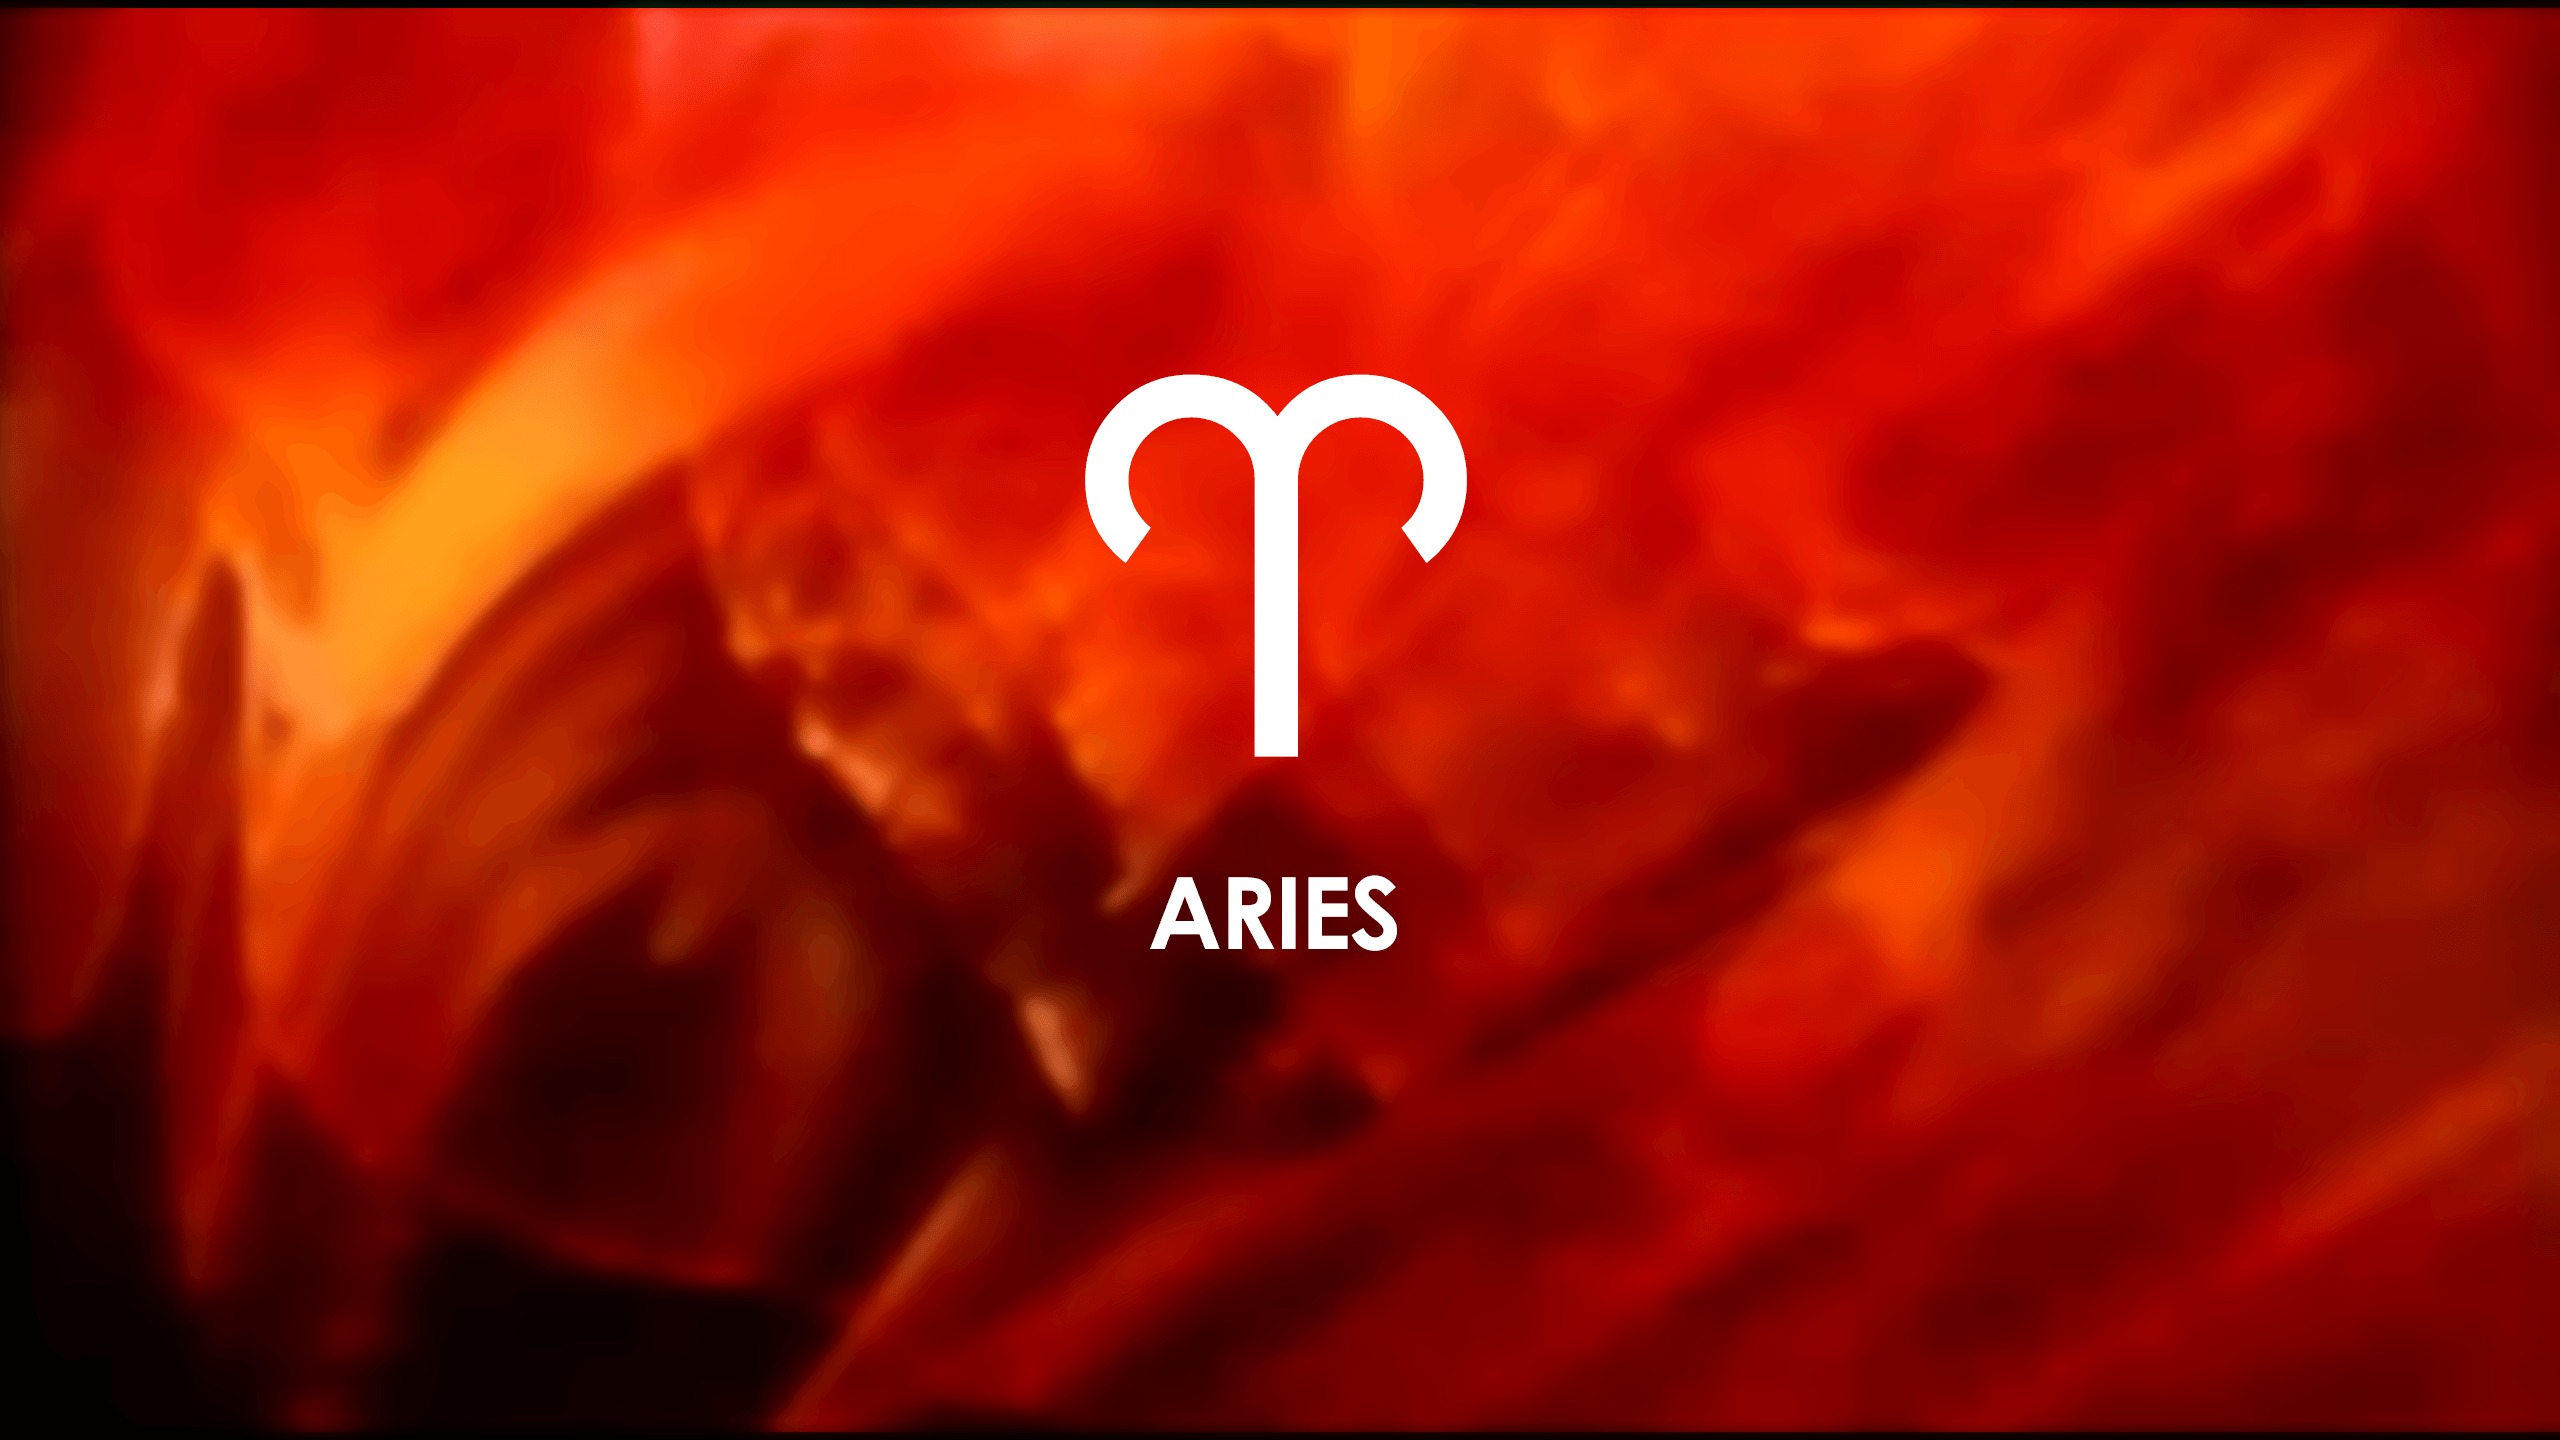 Zodiac sign of Aries by SergeM73 on DeviantArt